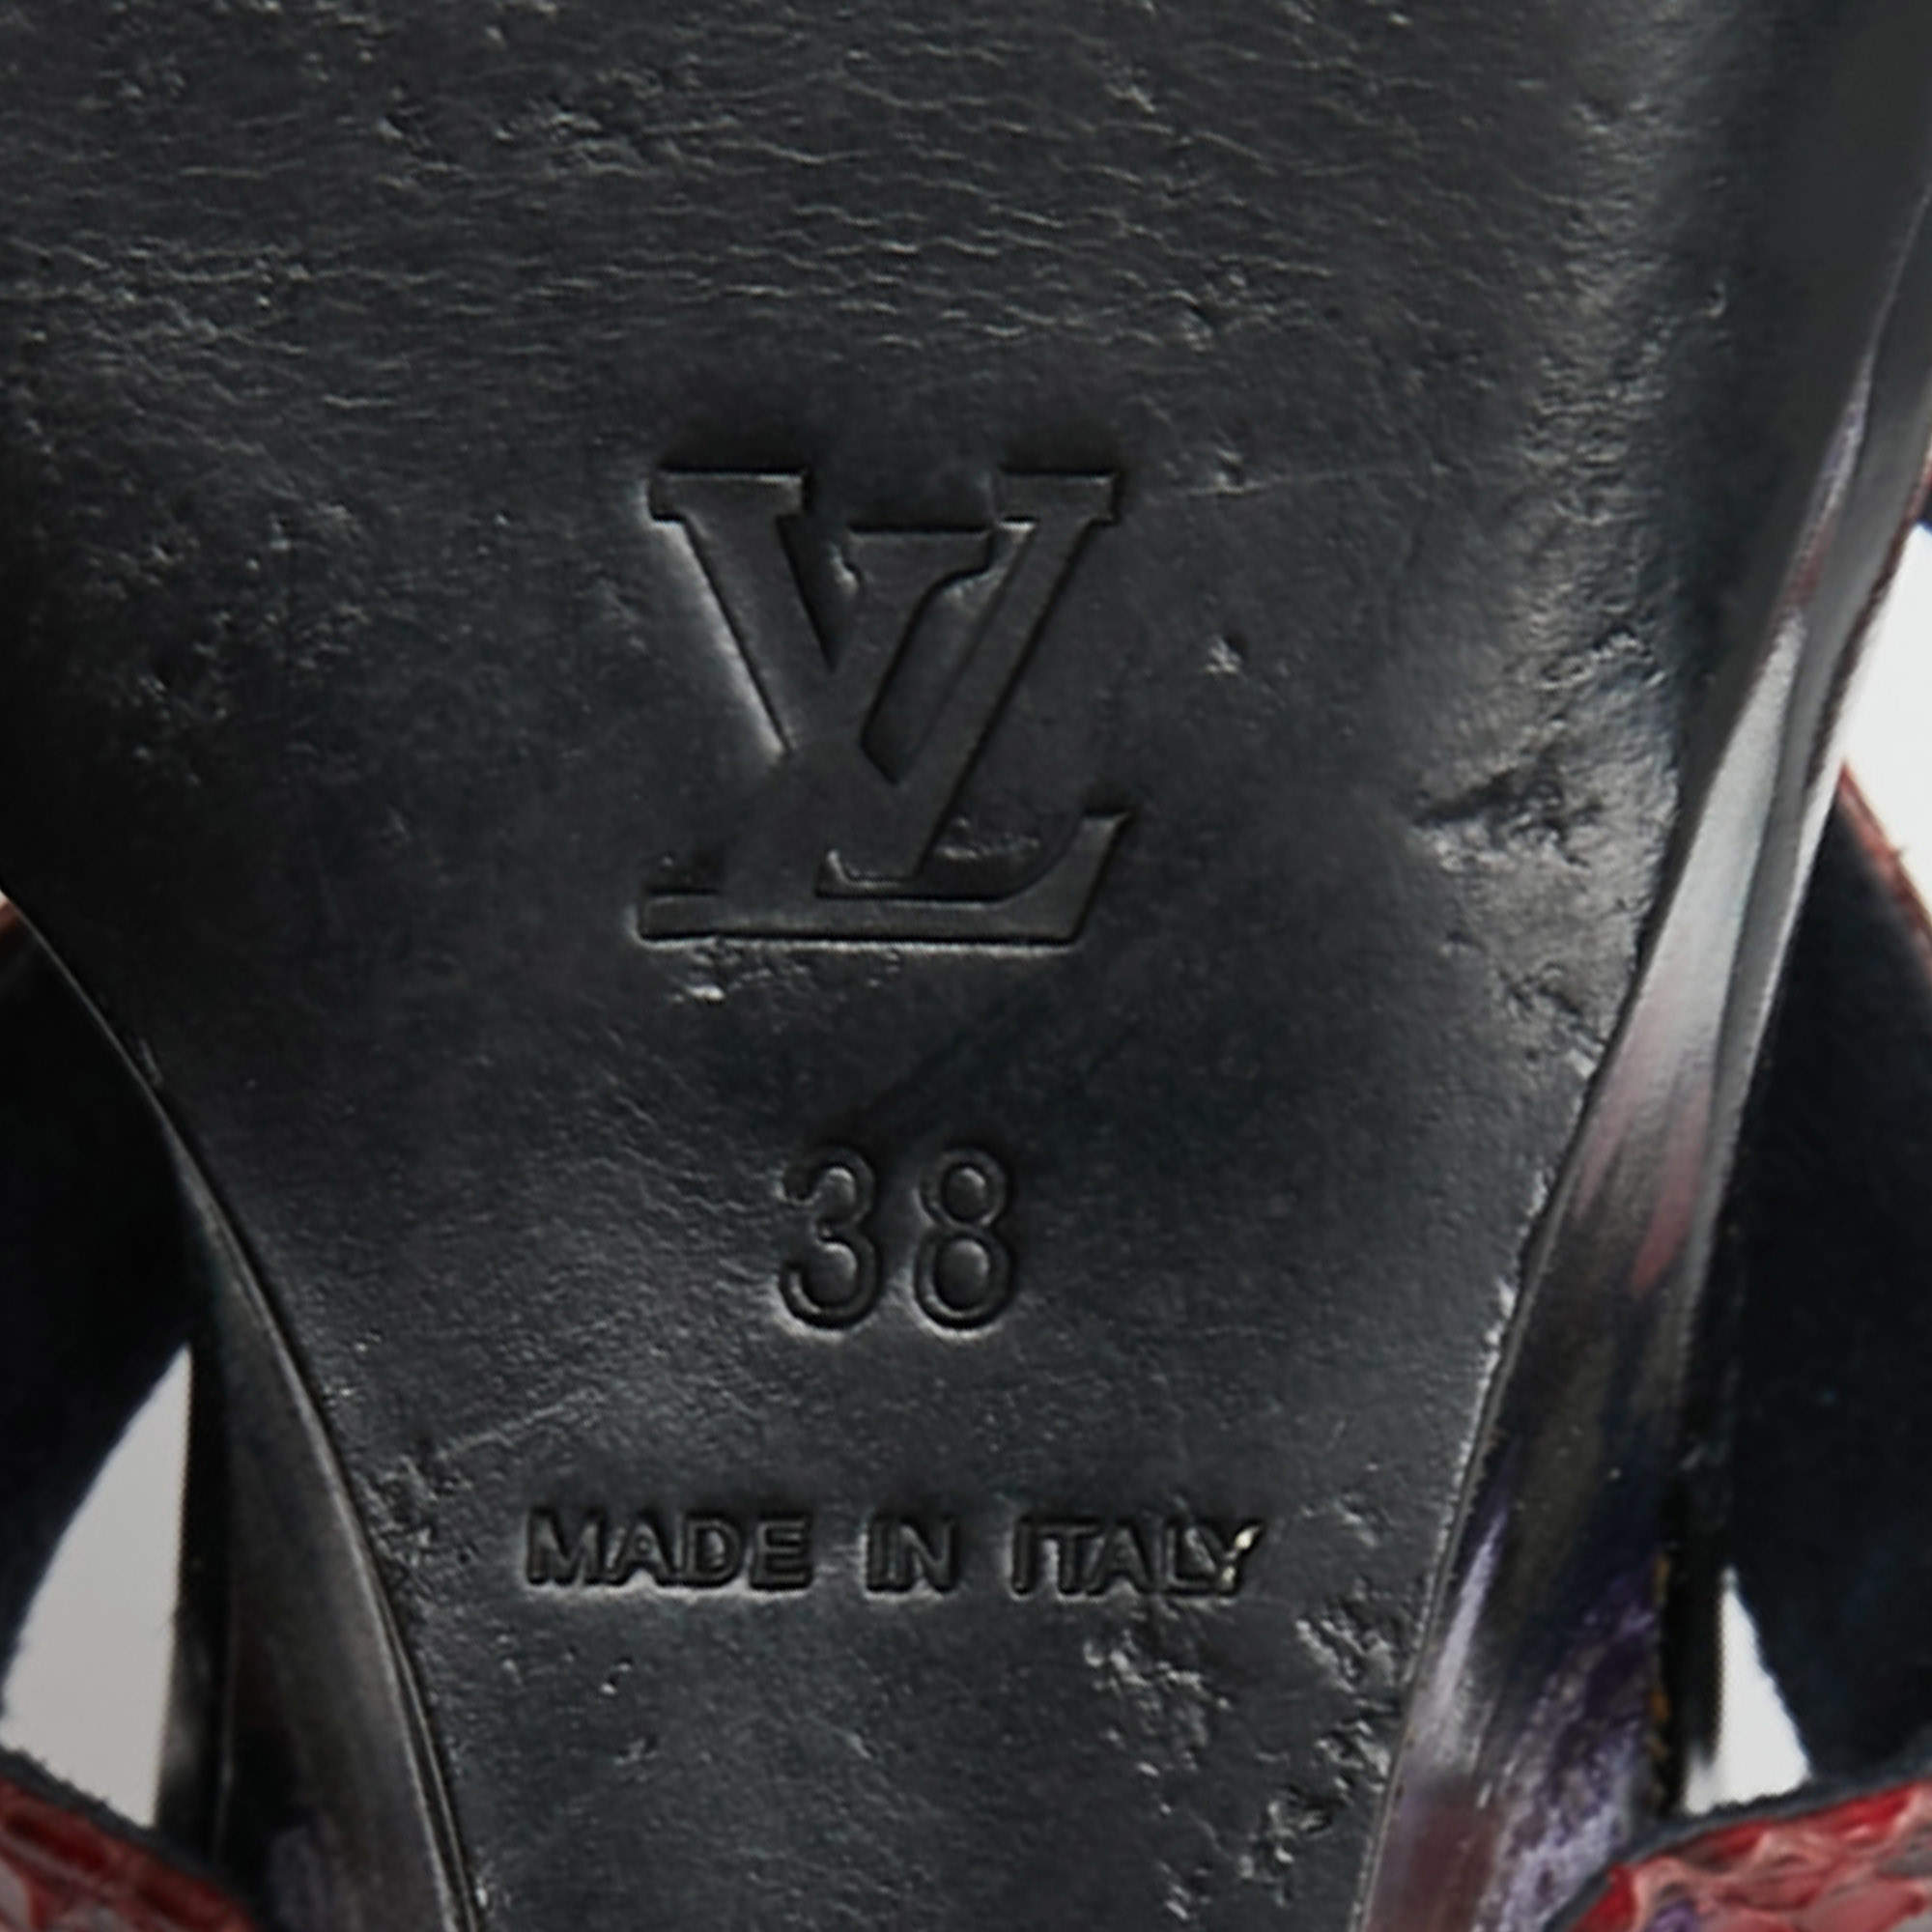 Louis Vuitton Dark Red/Navy Blue Snakeskin and Velvet Cross Ankle Strap  Wedge Sandals Size 38 Louis Vuitton